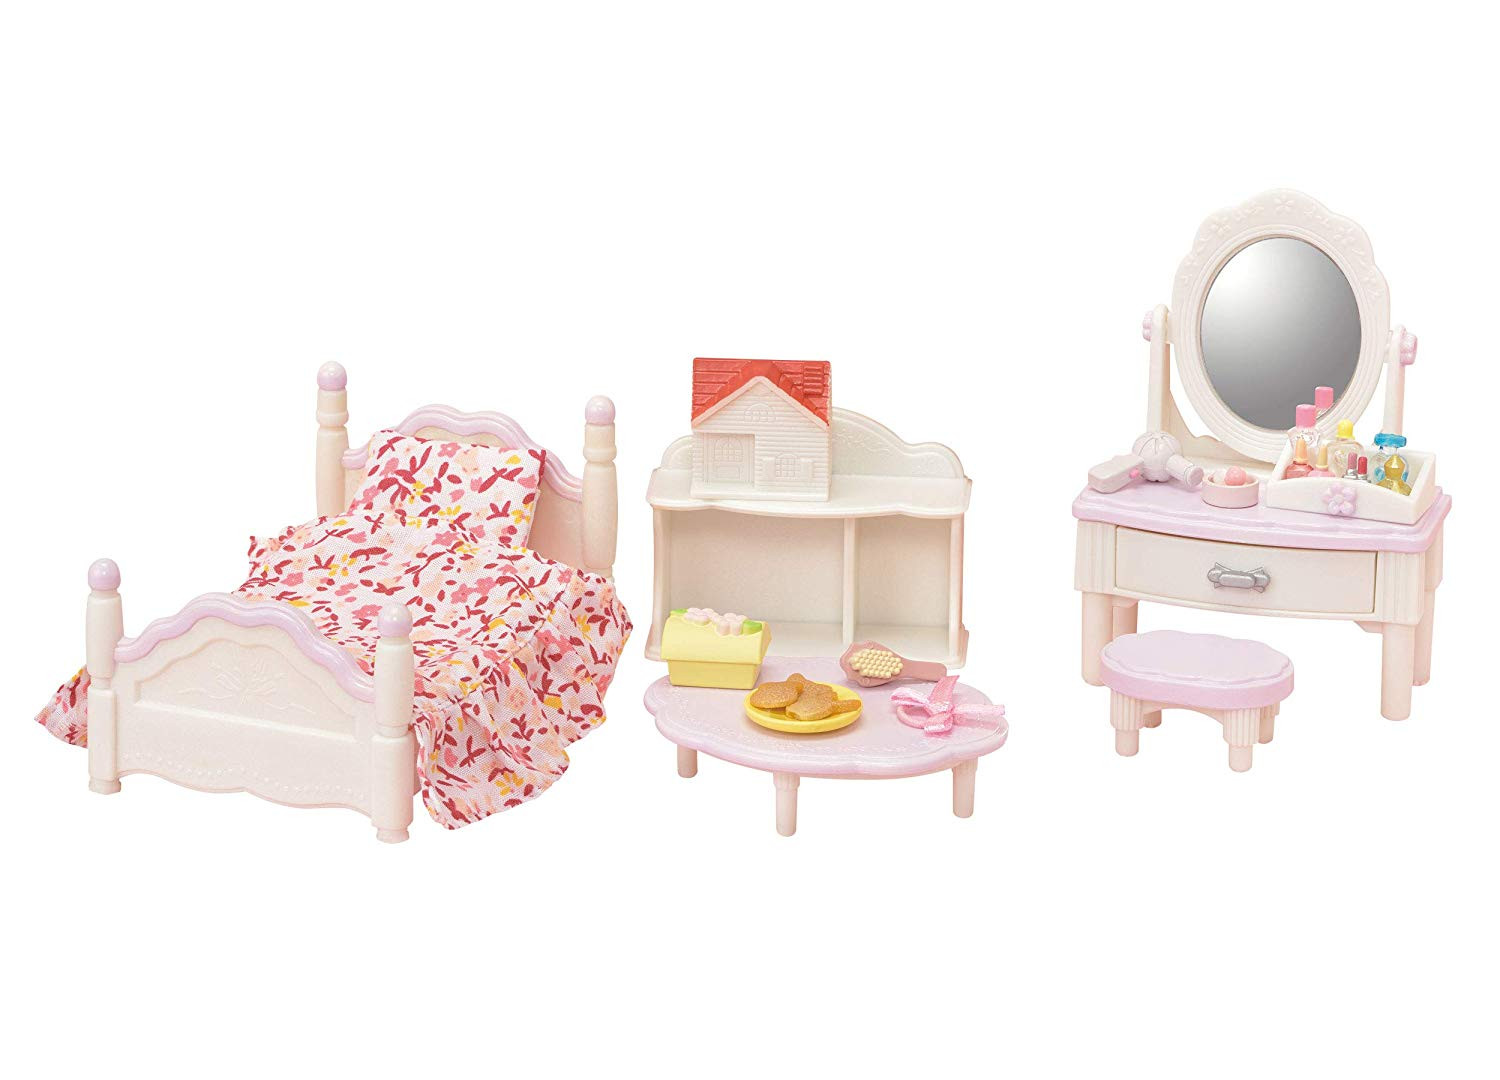 Calico Critters Girl'S Bedroom Set
 Calico Critters Bedroom & Vanity Set was $19 95 NOW $5 69